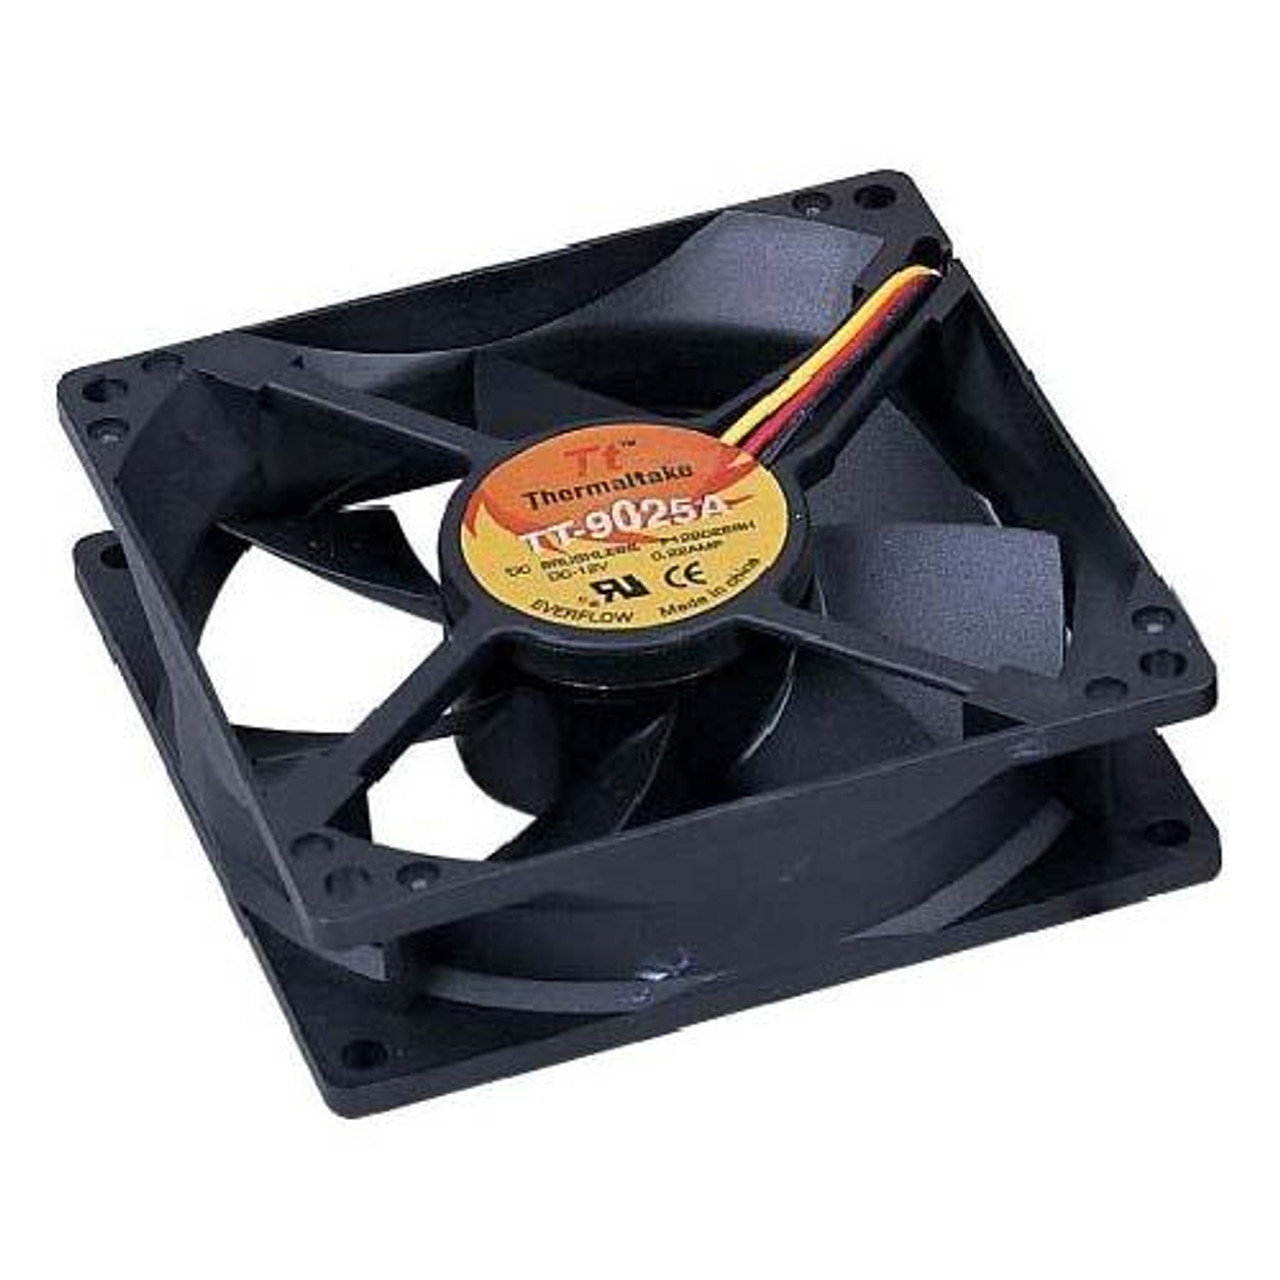 TT9025 Thermaltake Thermal Model-TT9025 9cm Case Fan With 3 PIN Connectors 90mm X90mm X25mm